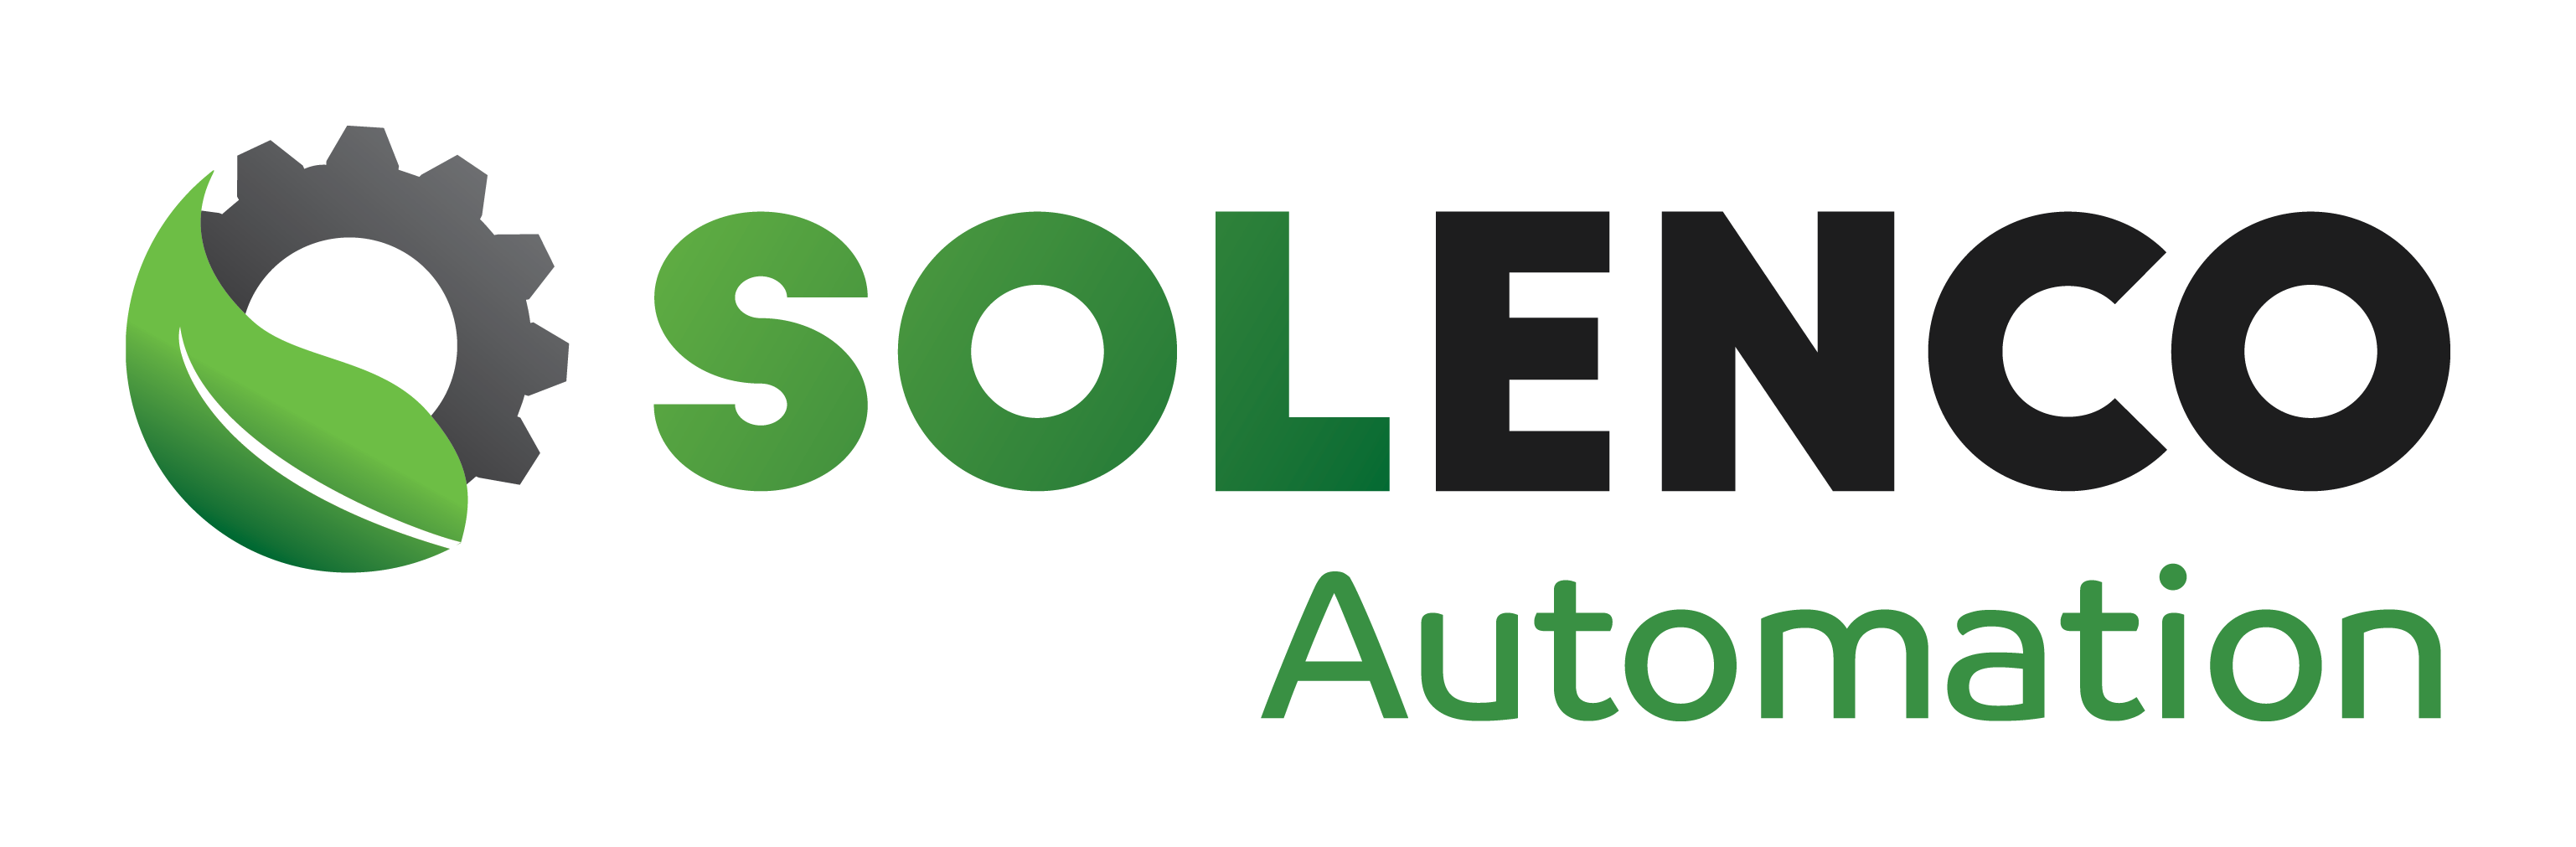 Solenco Automation logo